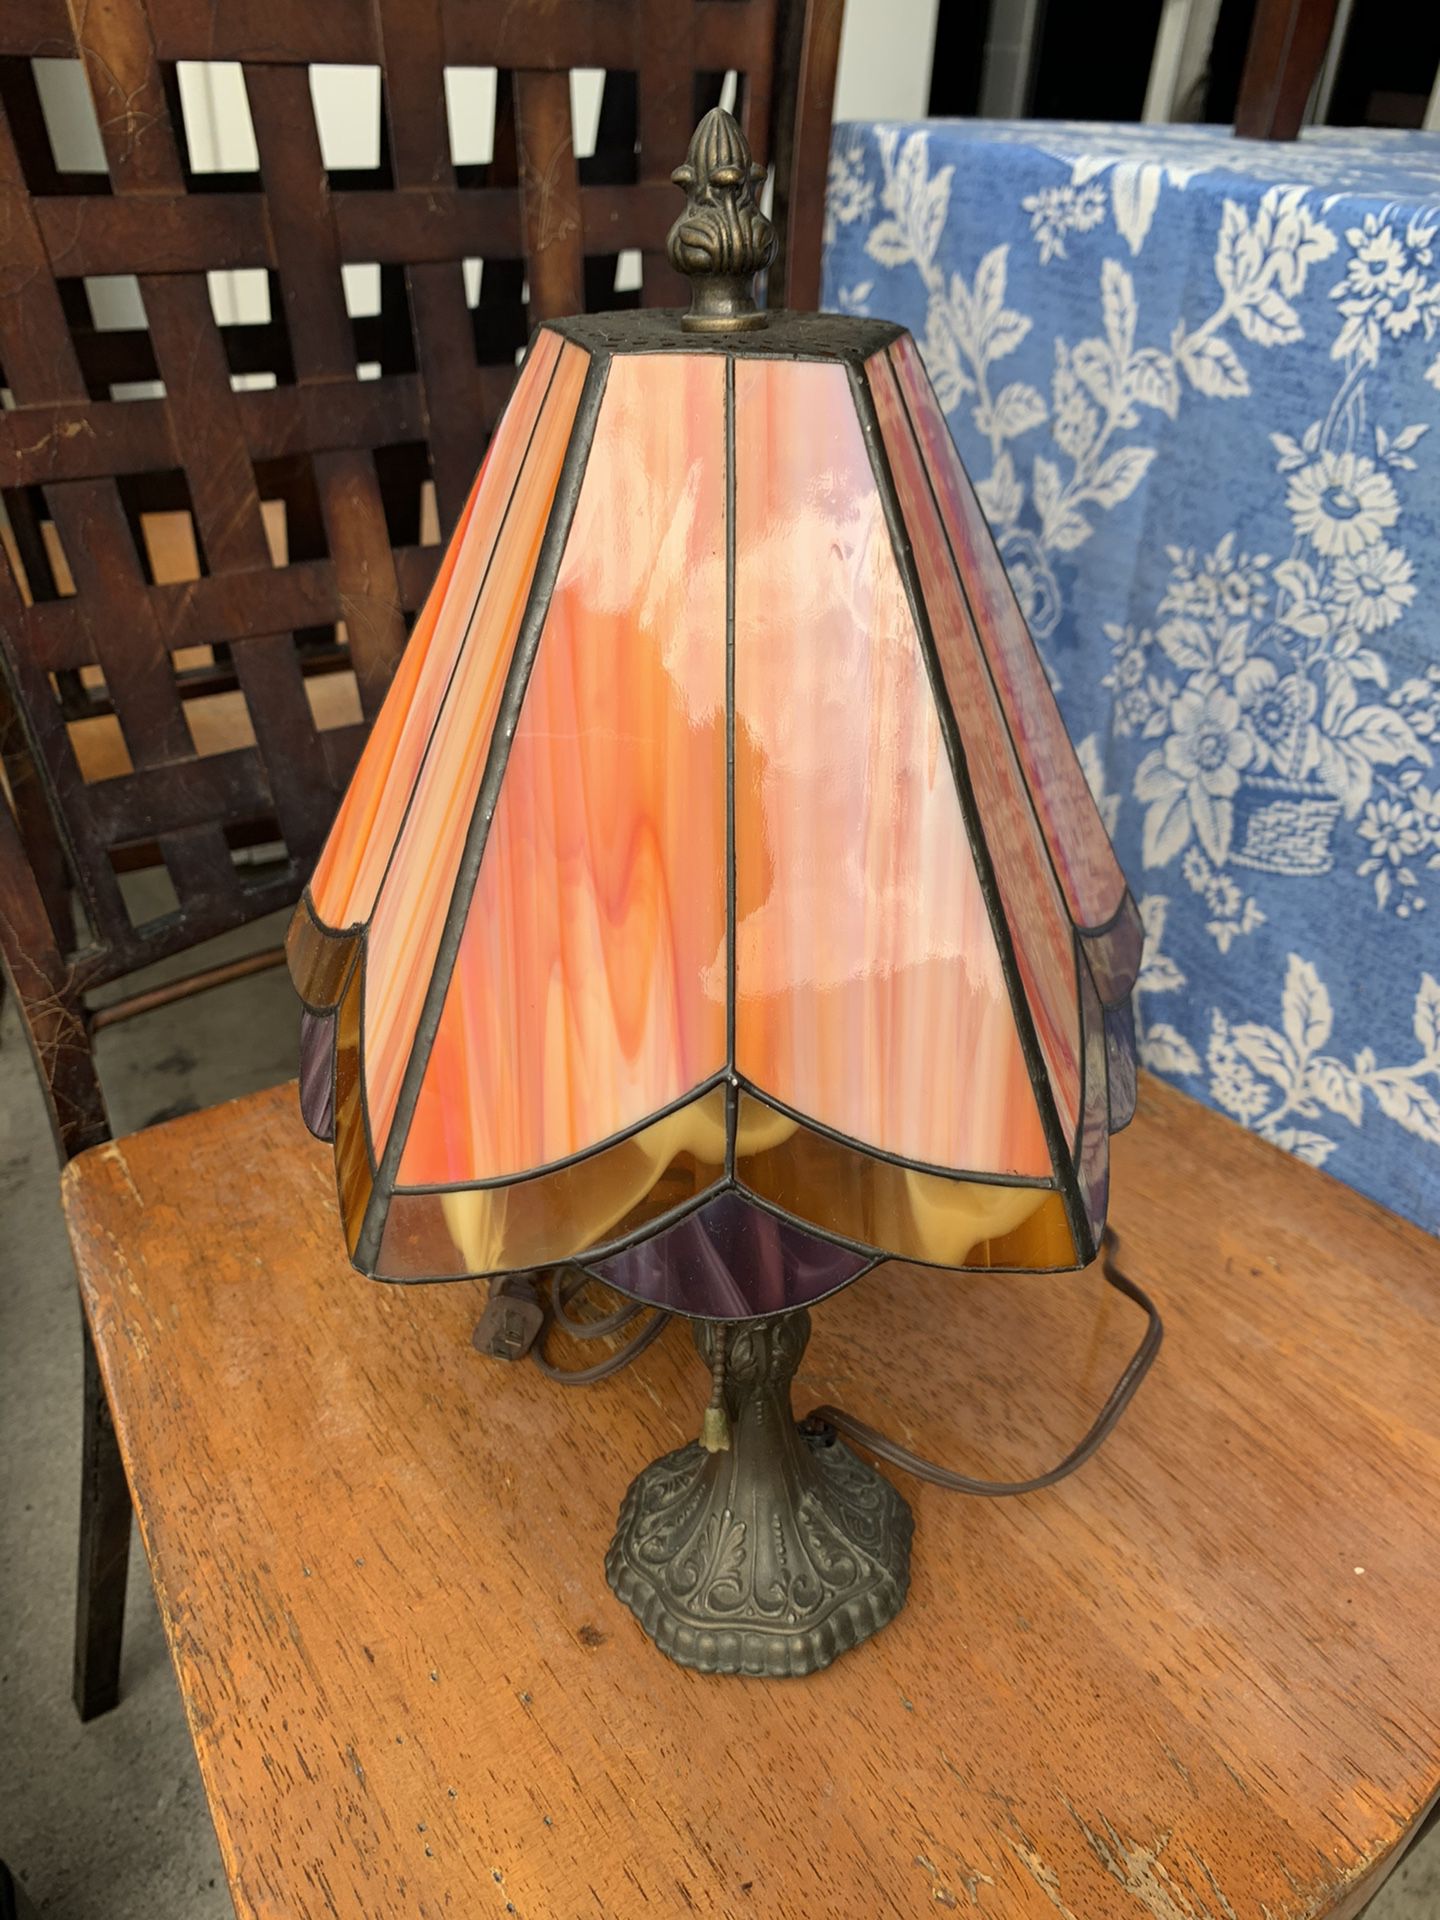 Antique small lamp